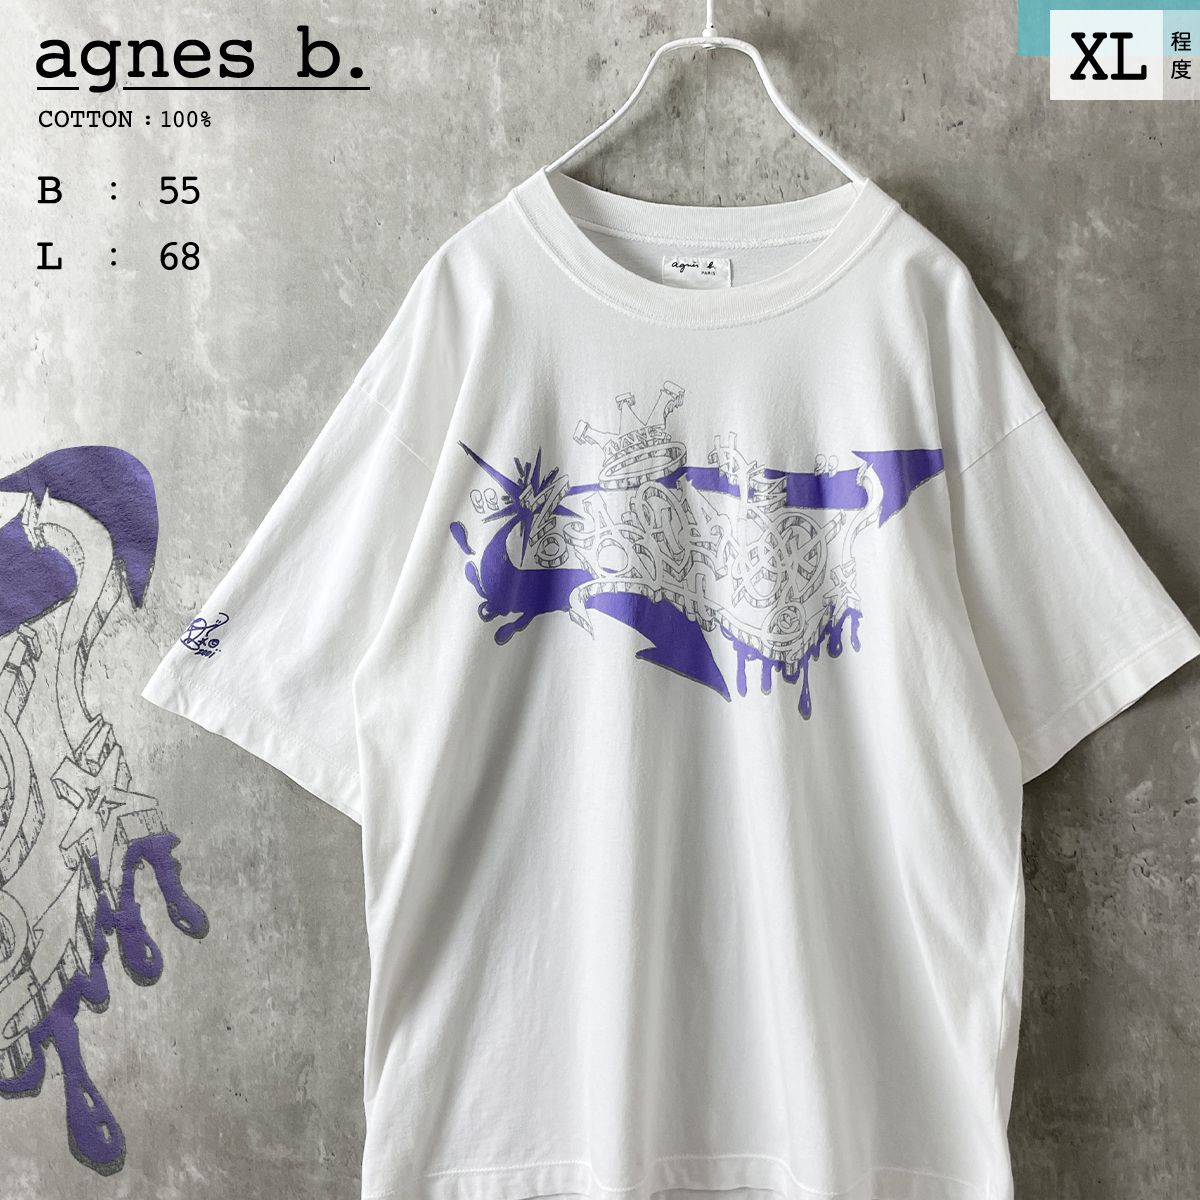 agnes b. アシンメトリー 綿 100% コットン グラフィック アート ロゴ 半袖 プリント Tシャツ 白 ホワイト 紫 パープル イラスト メンズ XL